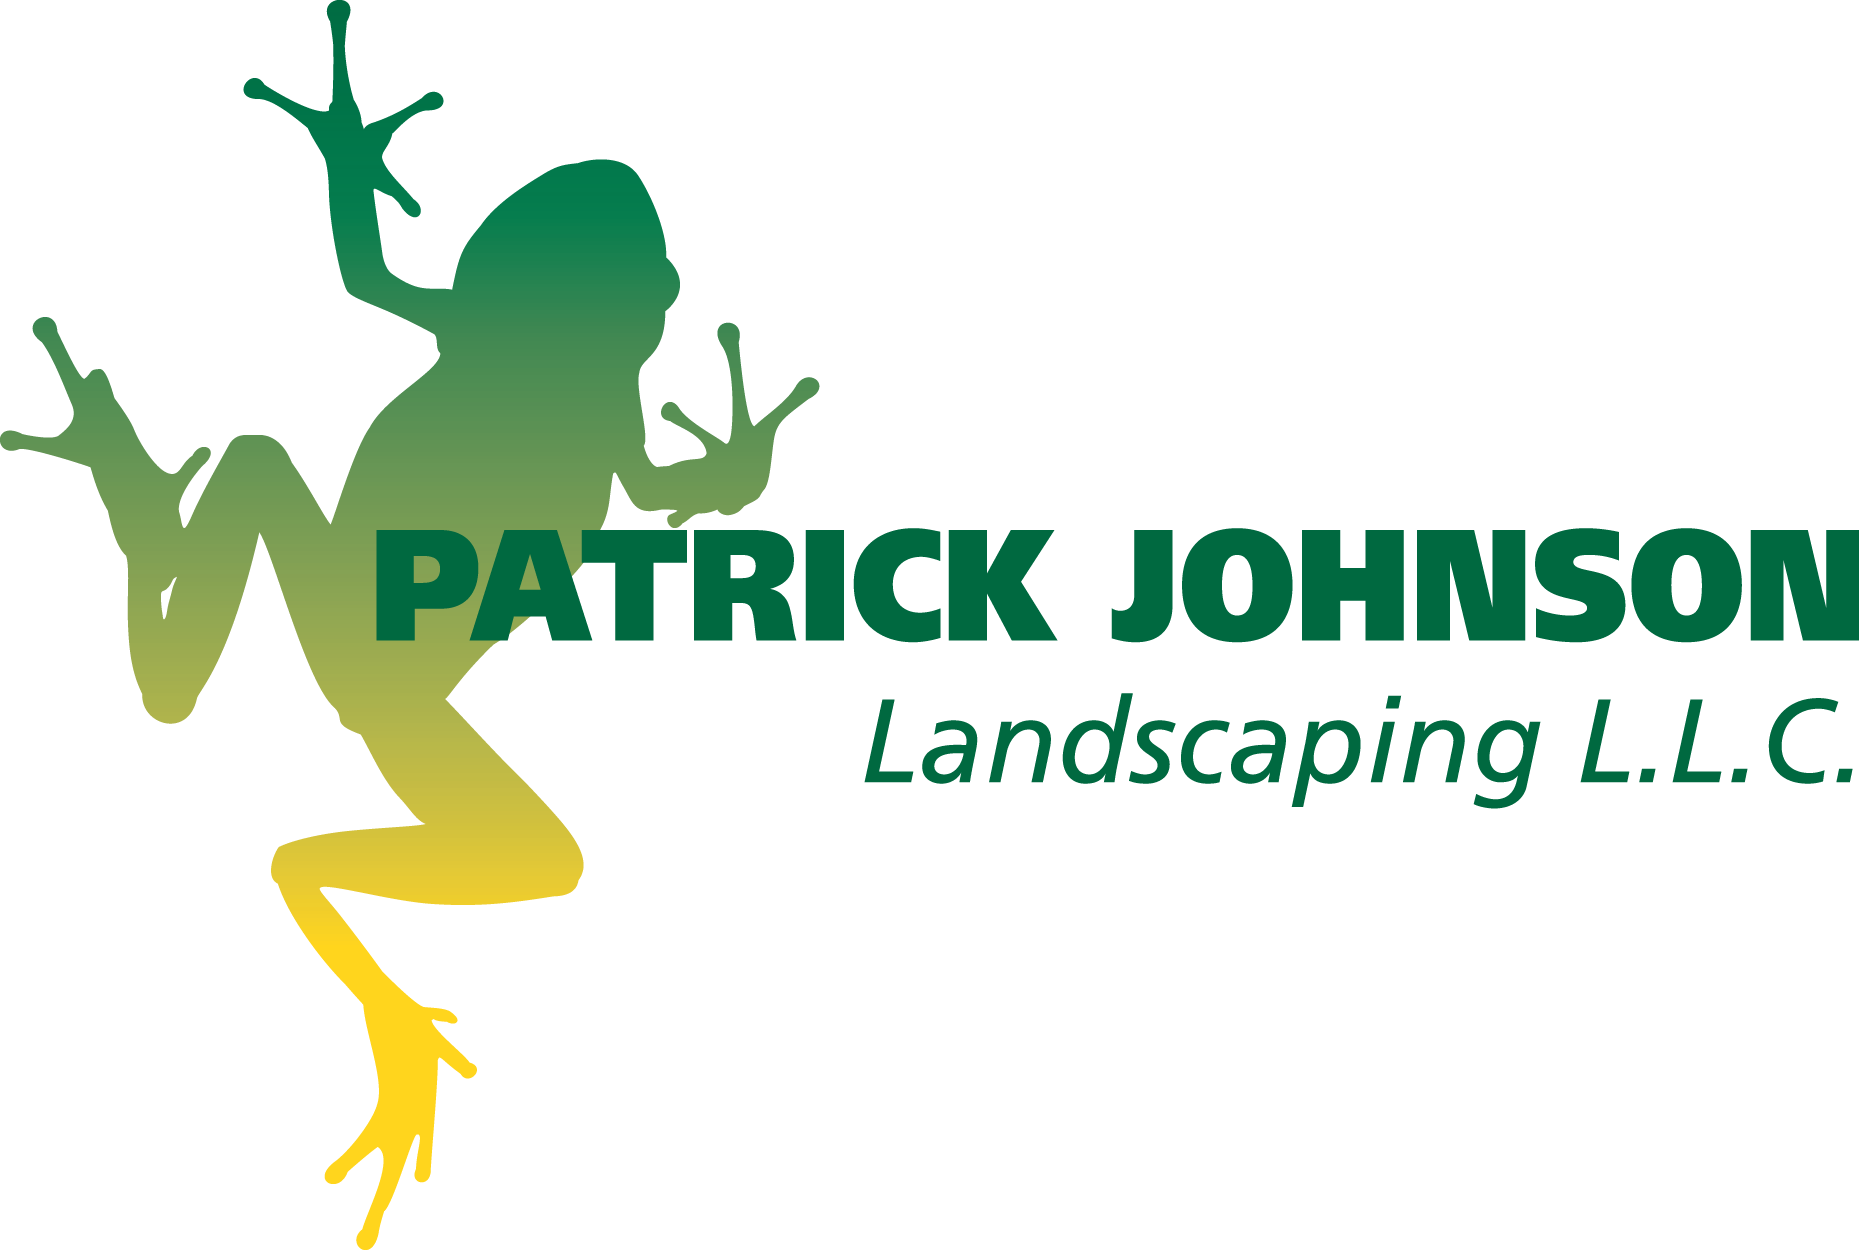 Patrick Johnson Landscaping, LLC